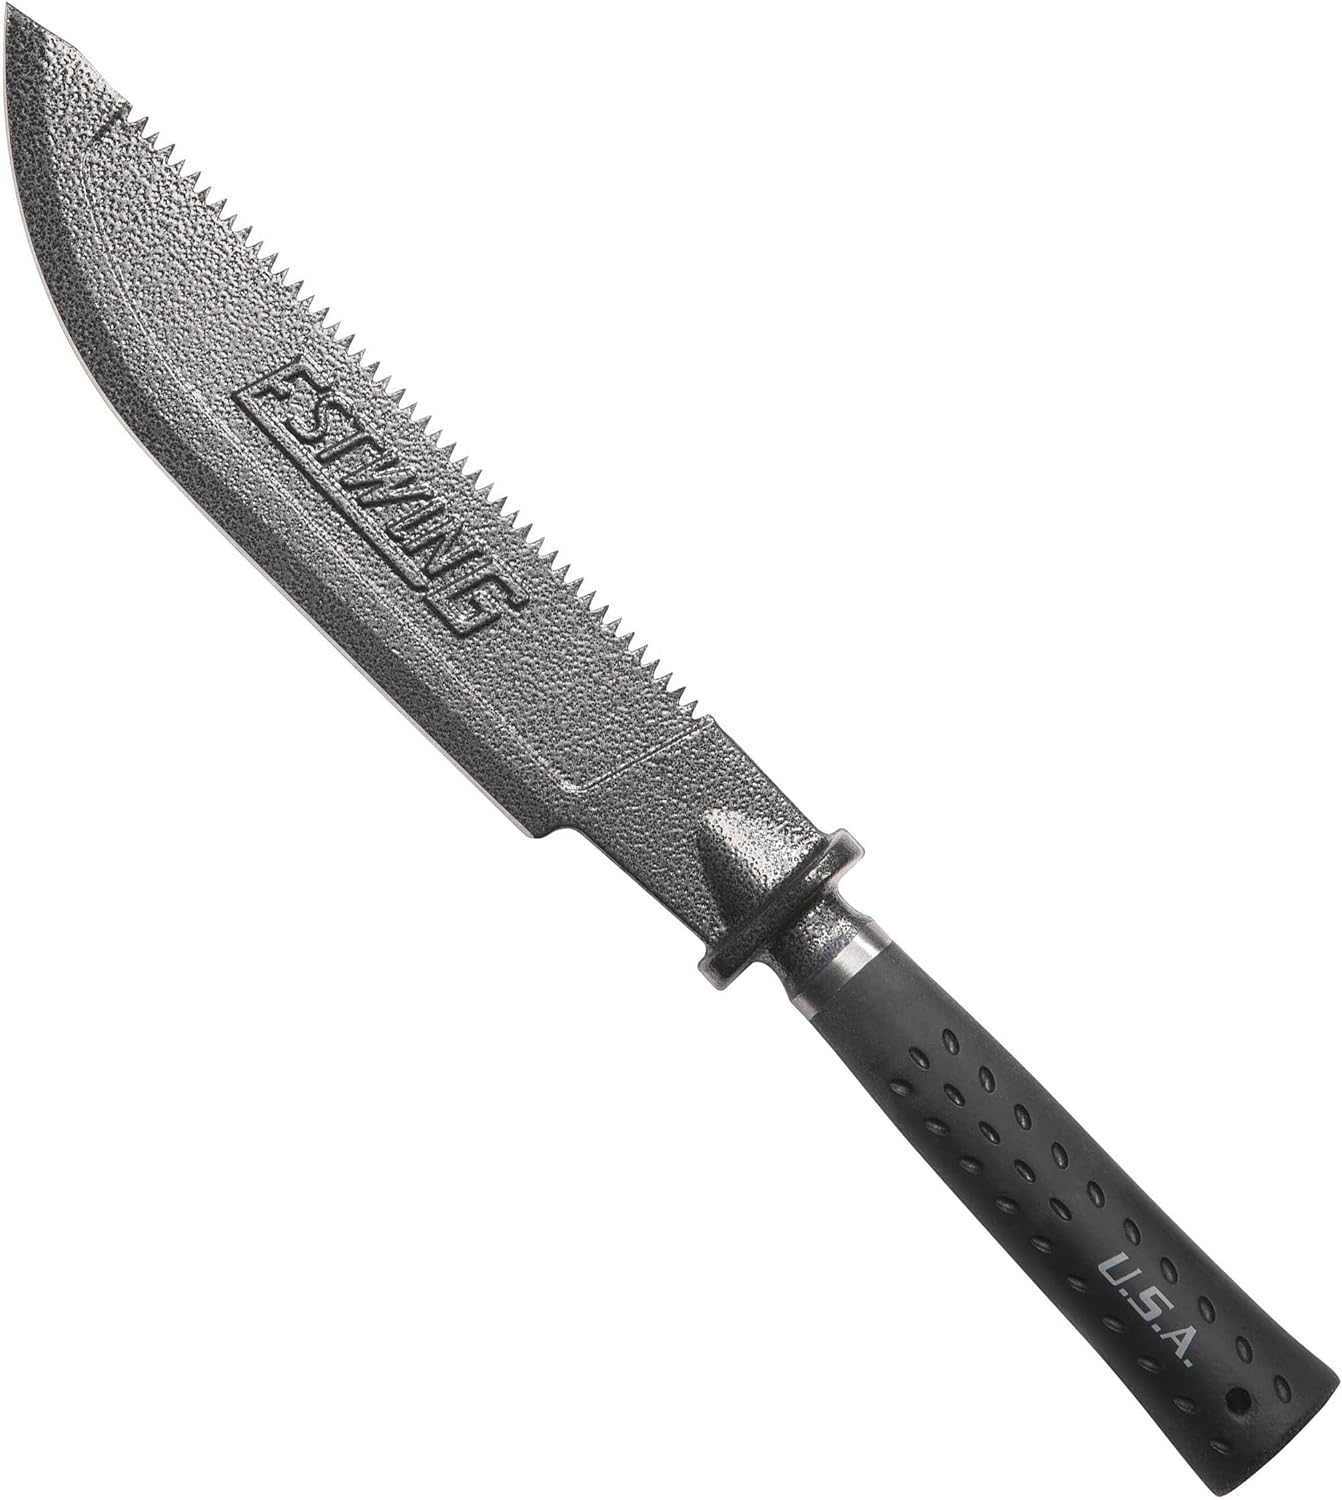 Estwing EBM Machete, 12" Blade (inches)